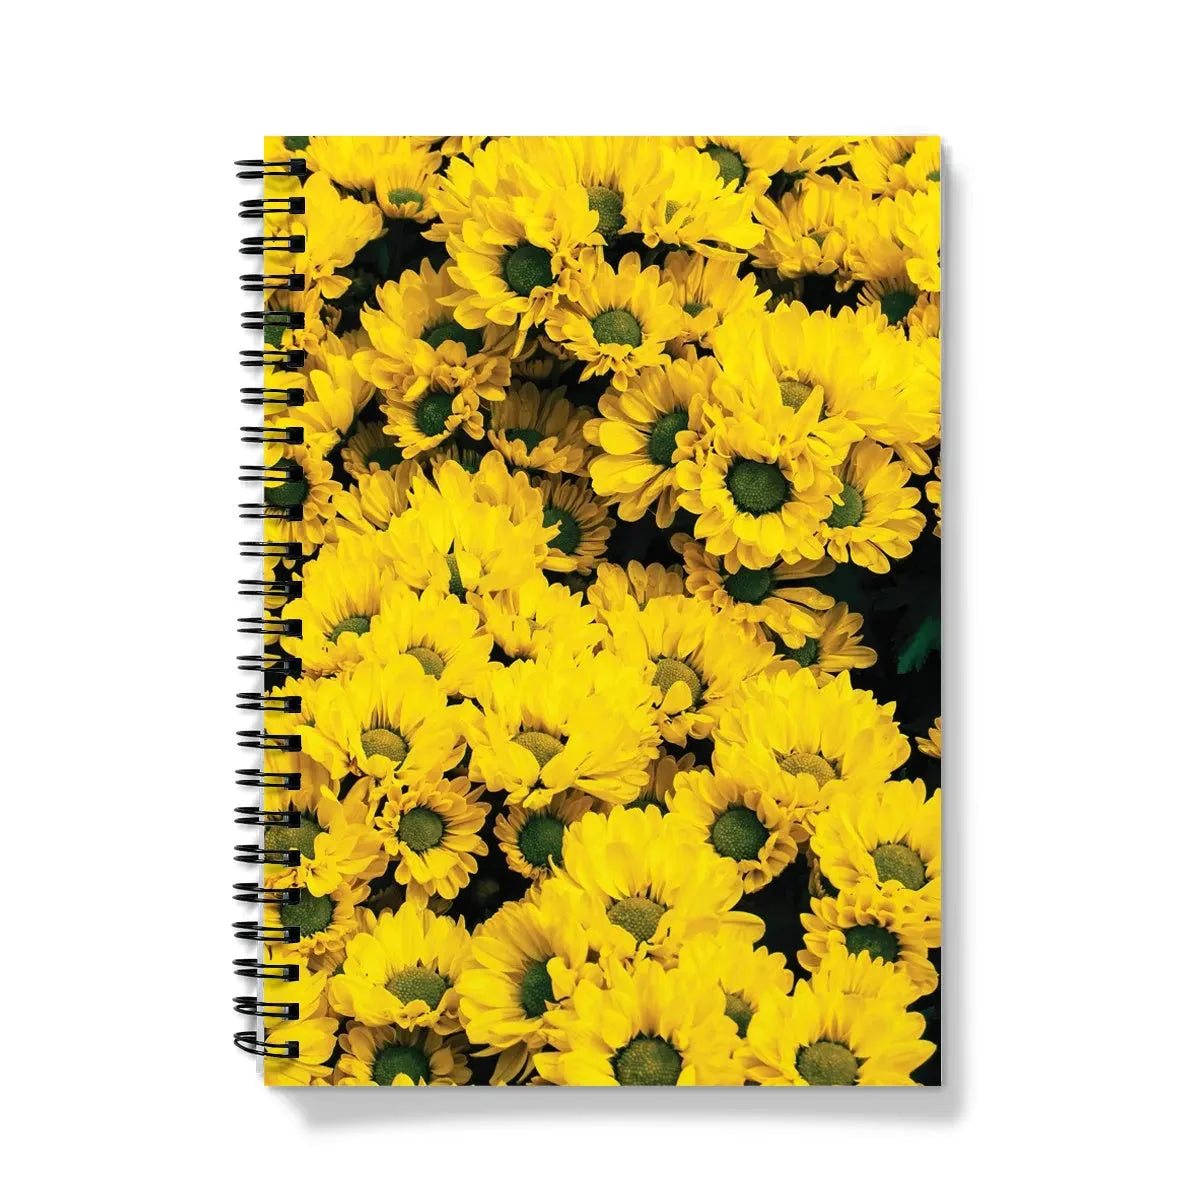 Yellow Brick Road Notebook - A5 - Graph Paper - Notebooks & Notepads - Aesthetic Art